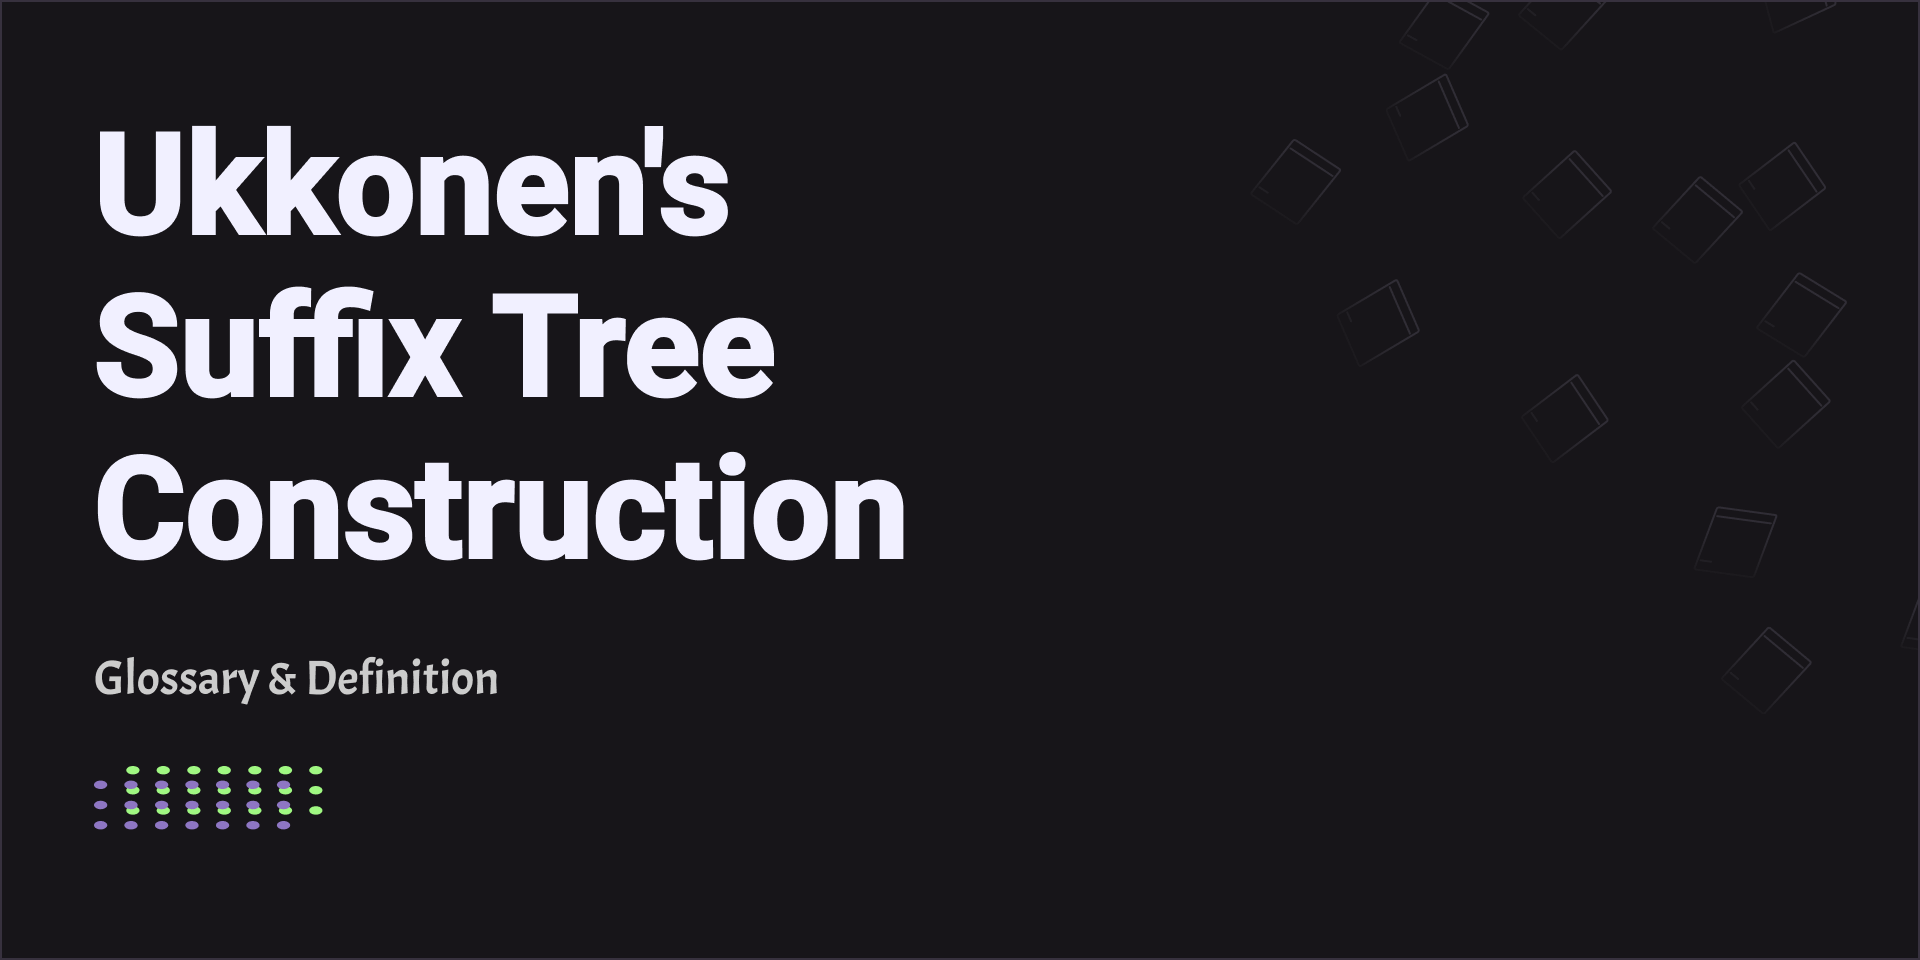 Ukkonen's Suffix Tree Construction